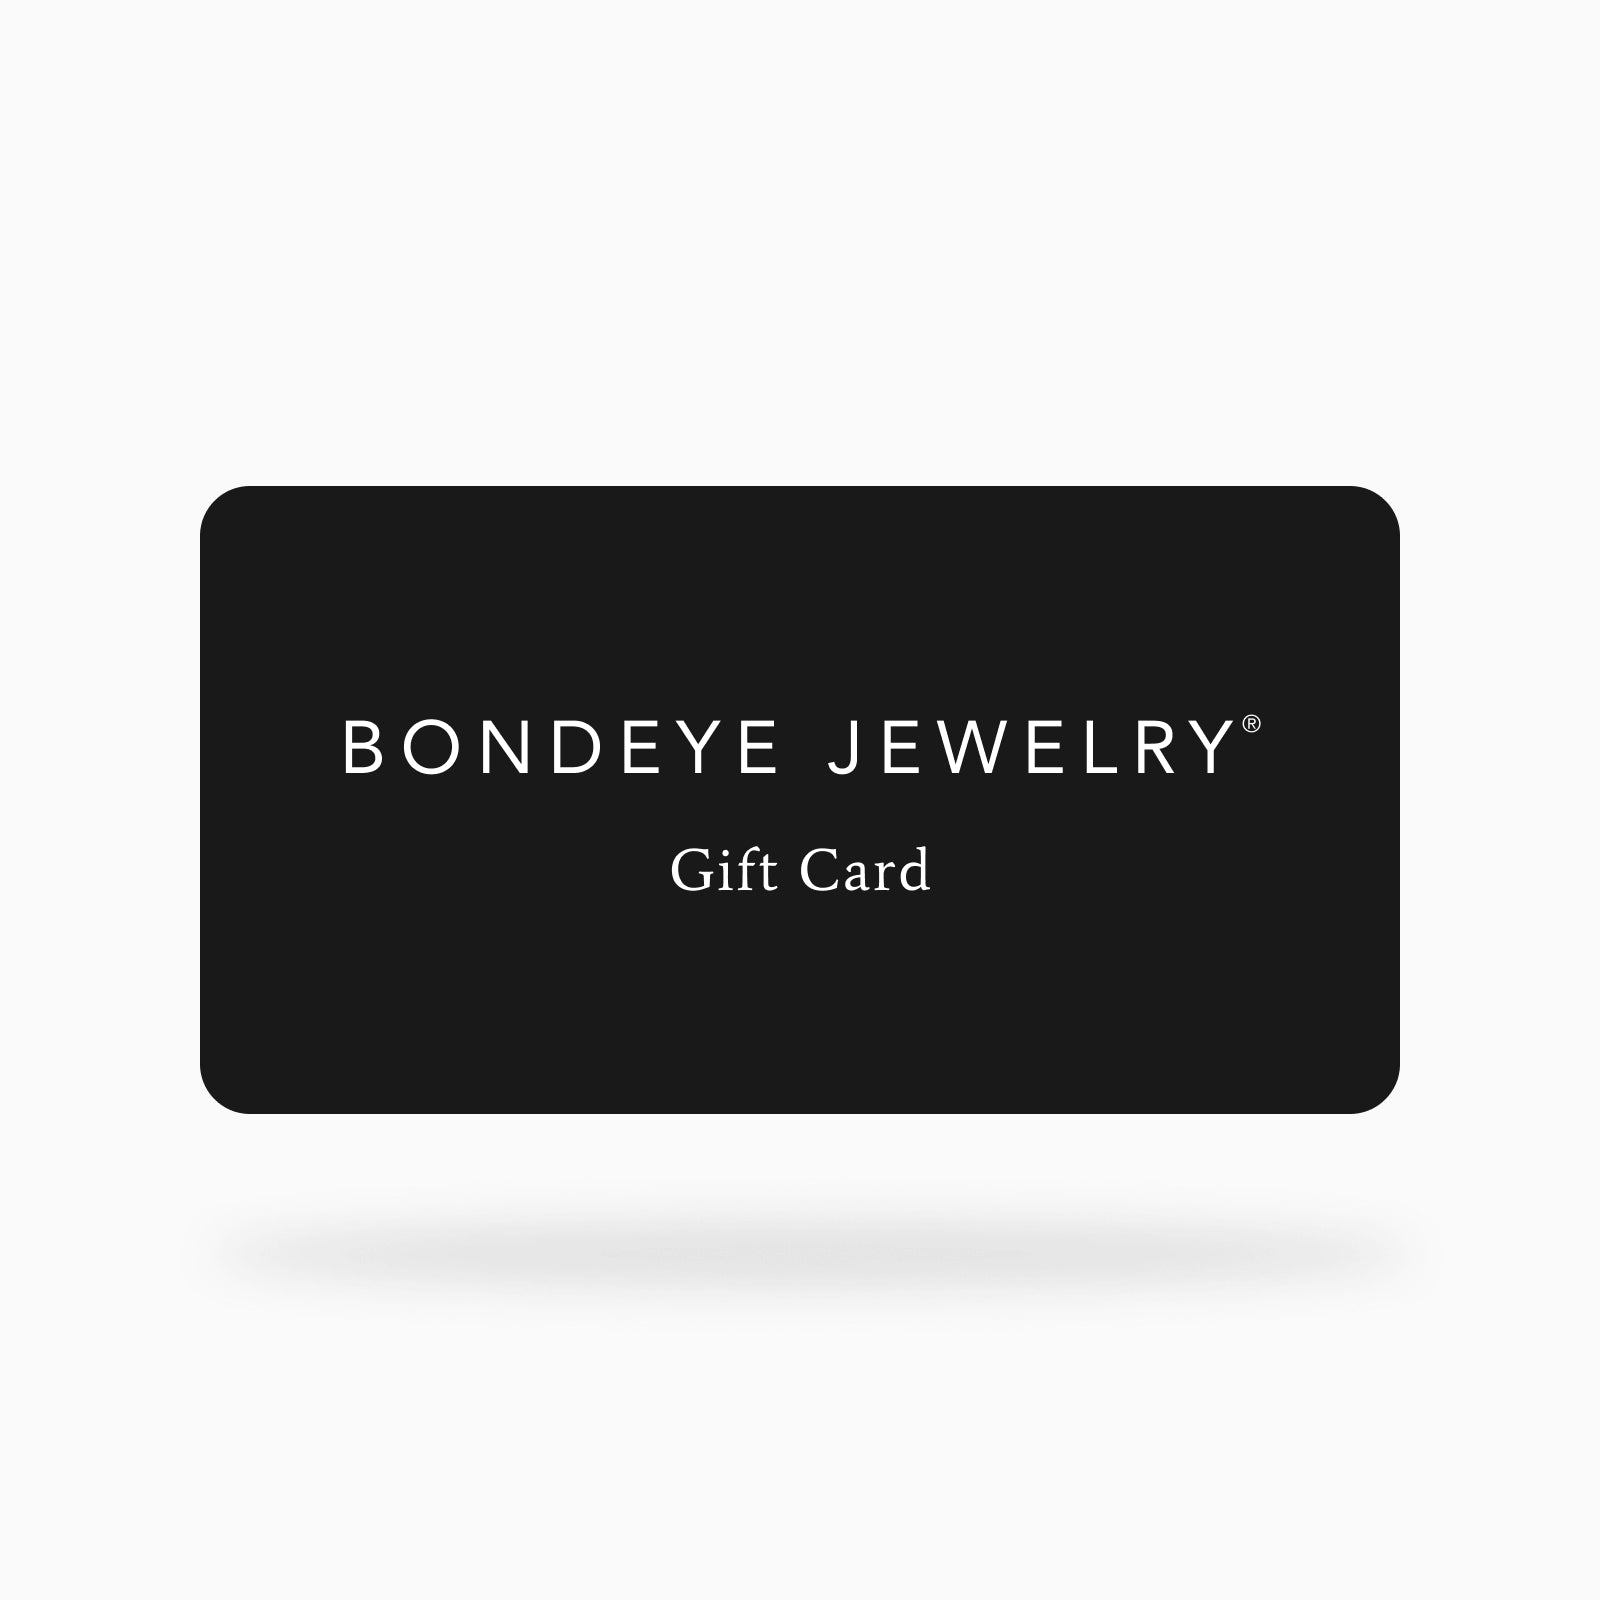 Bondeye Jewelry Gift Card Gift Cards - BONDEYE JEWELRY ®